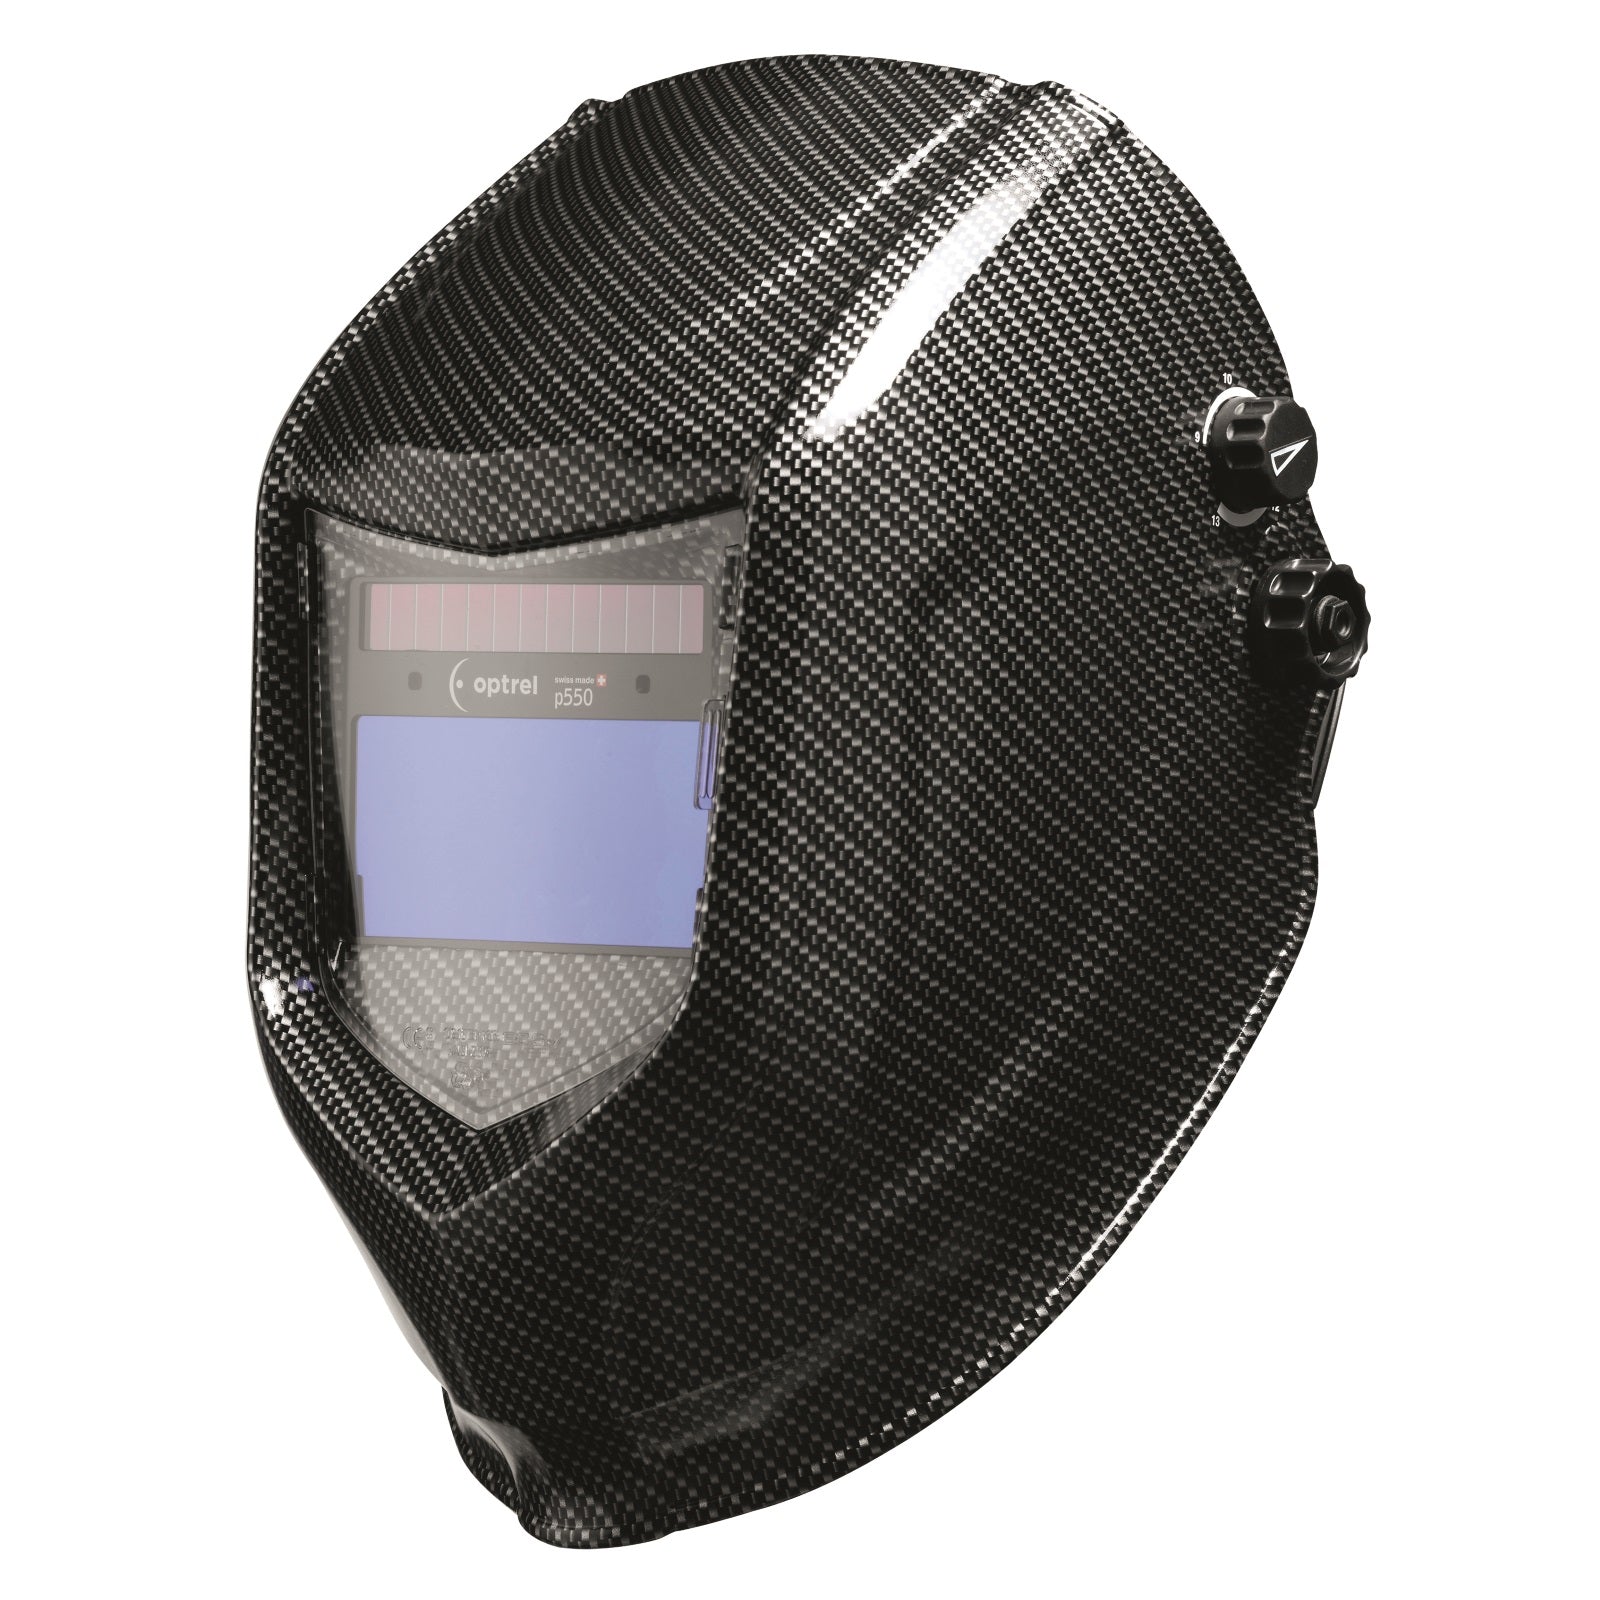 Optrel p550 Series Carbon Fiber Helmet (1007.070)